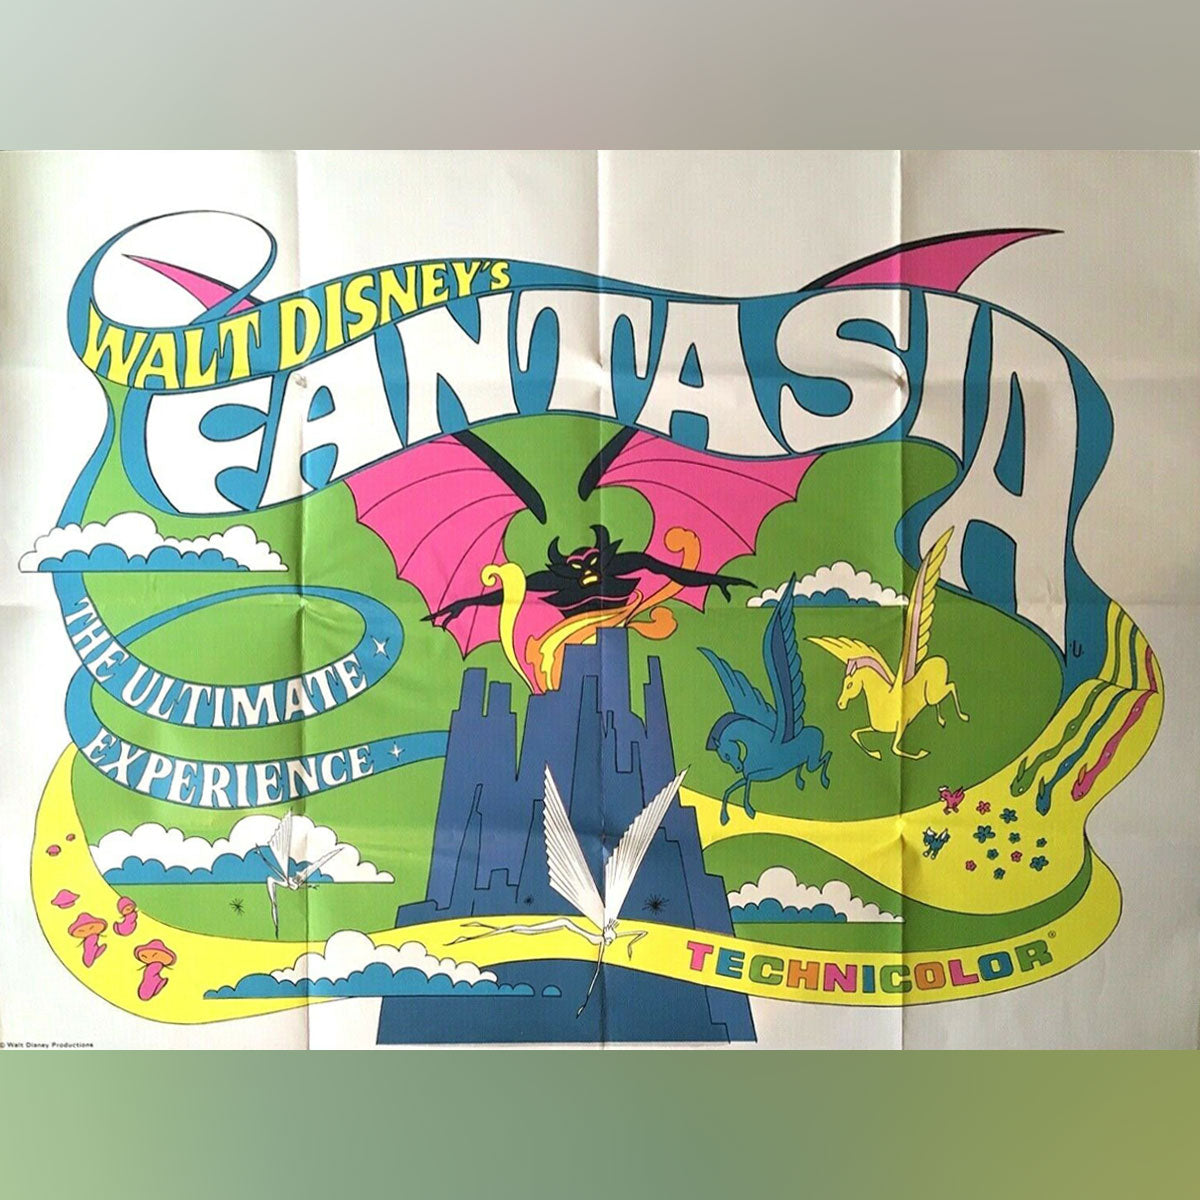 Fantasia (R1976)